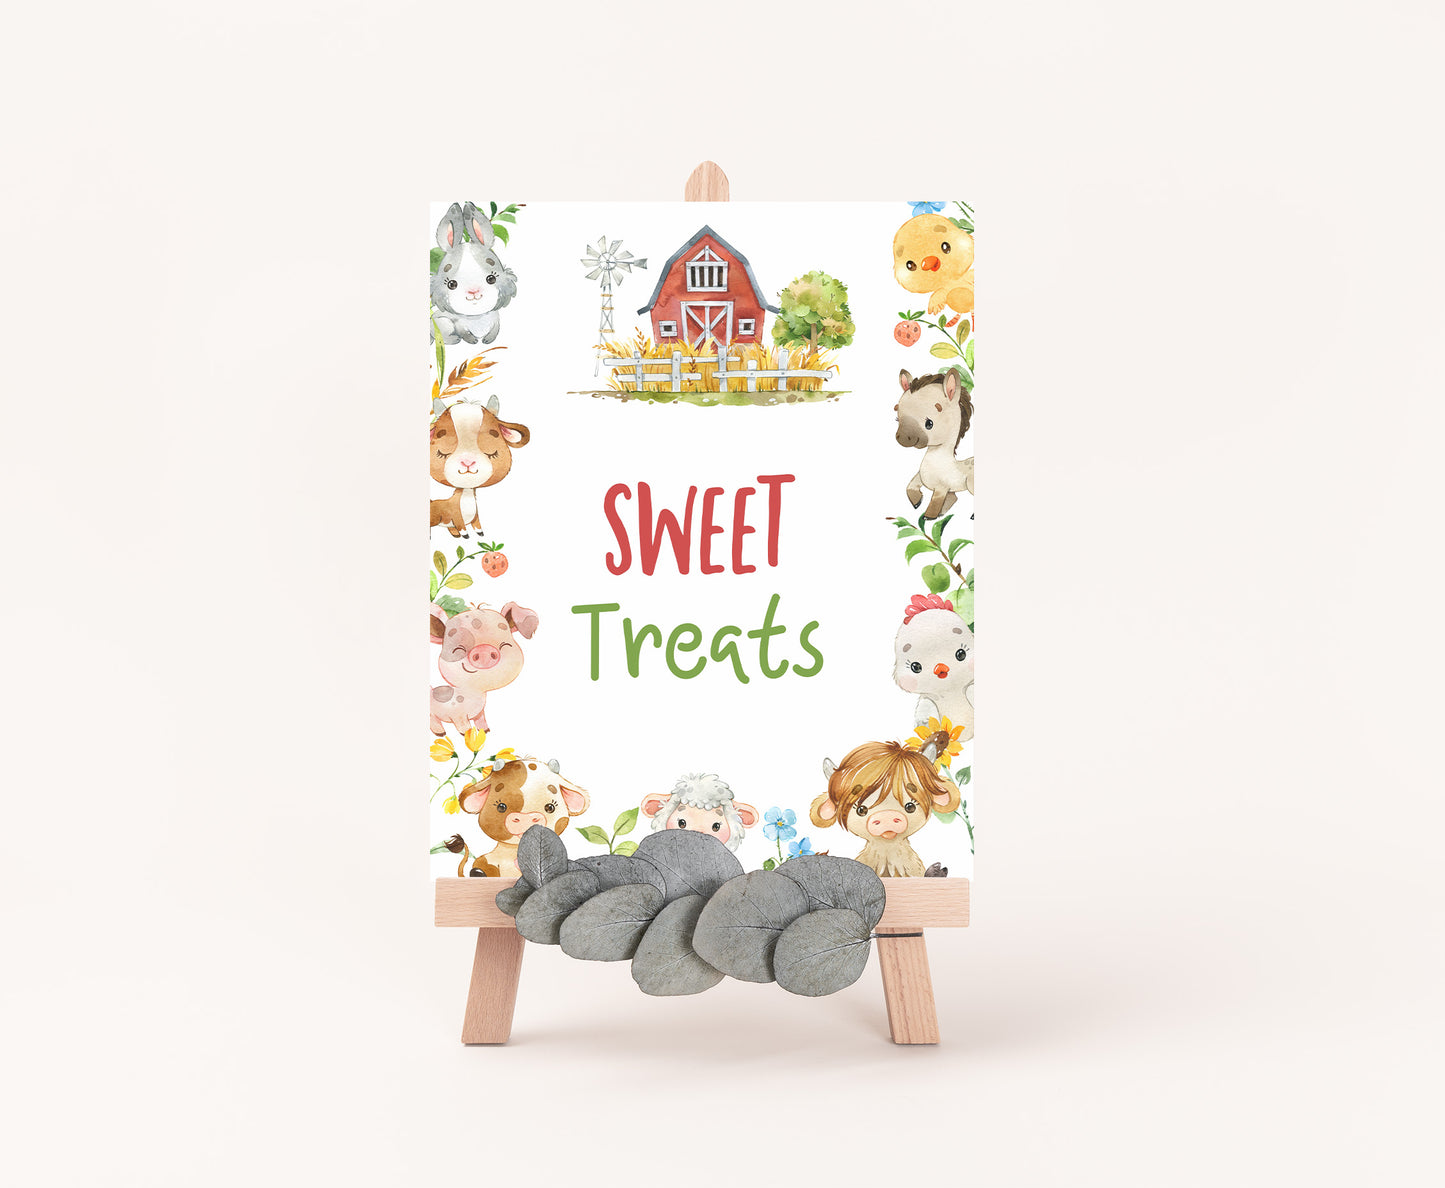 Sweet Treats Sign Printable | Farm Party Table Decoration - 11d